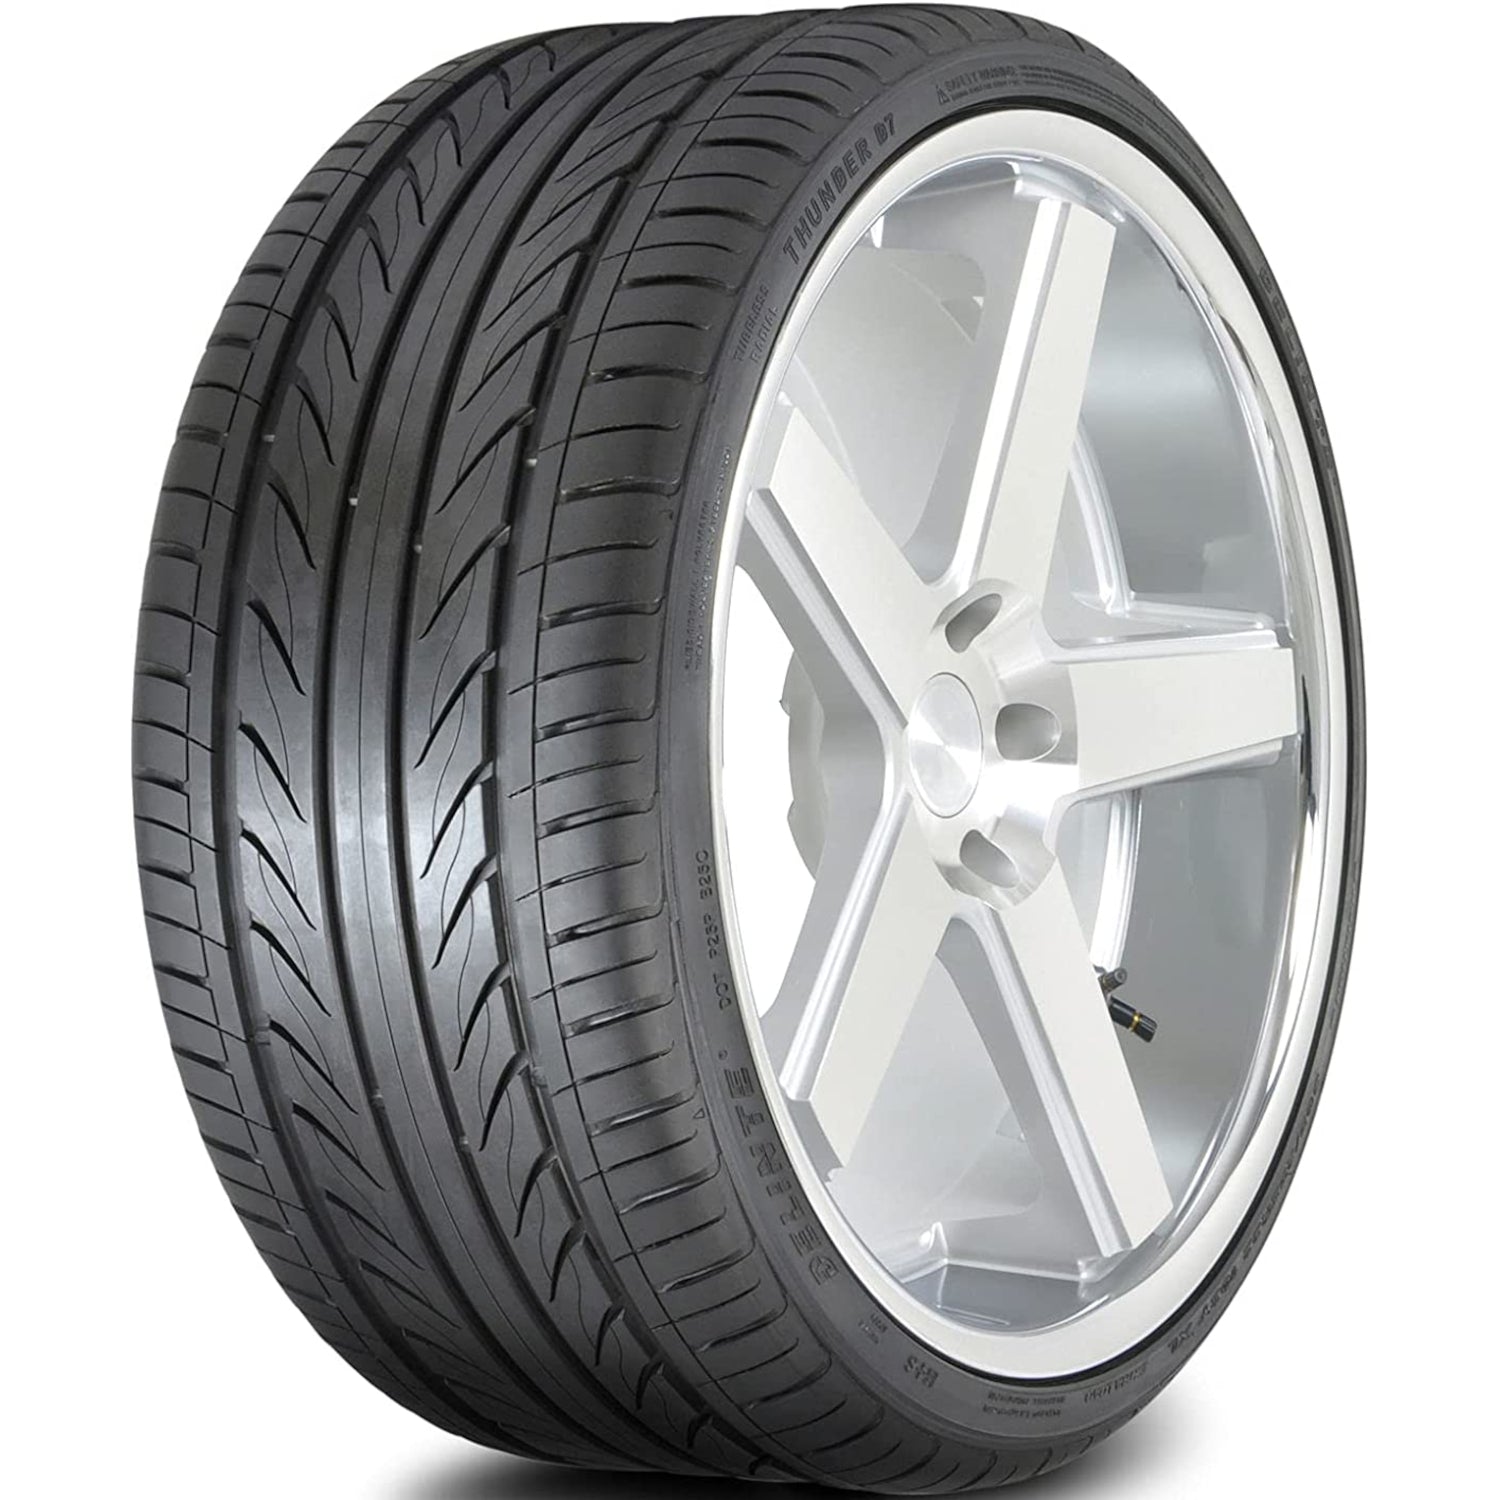 DELINTE D7 THUNDER 225/30ZR20 (25.4X9.1R 20) Tires